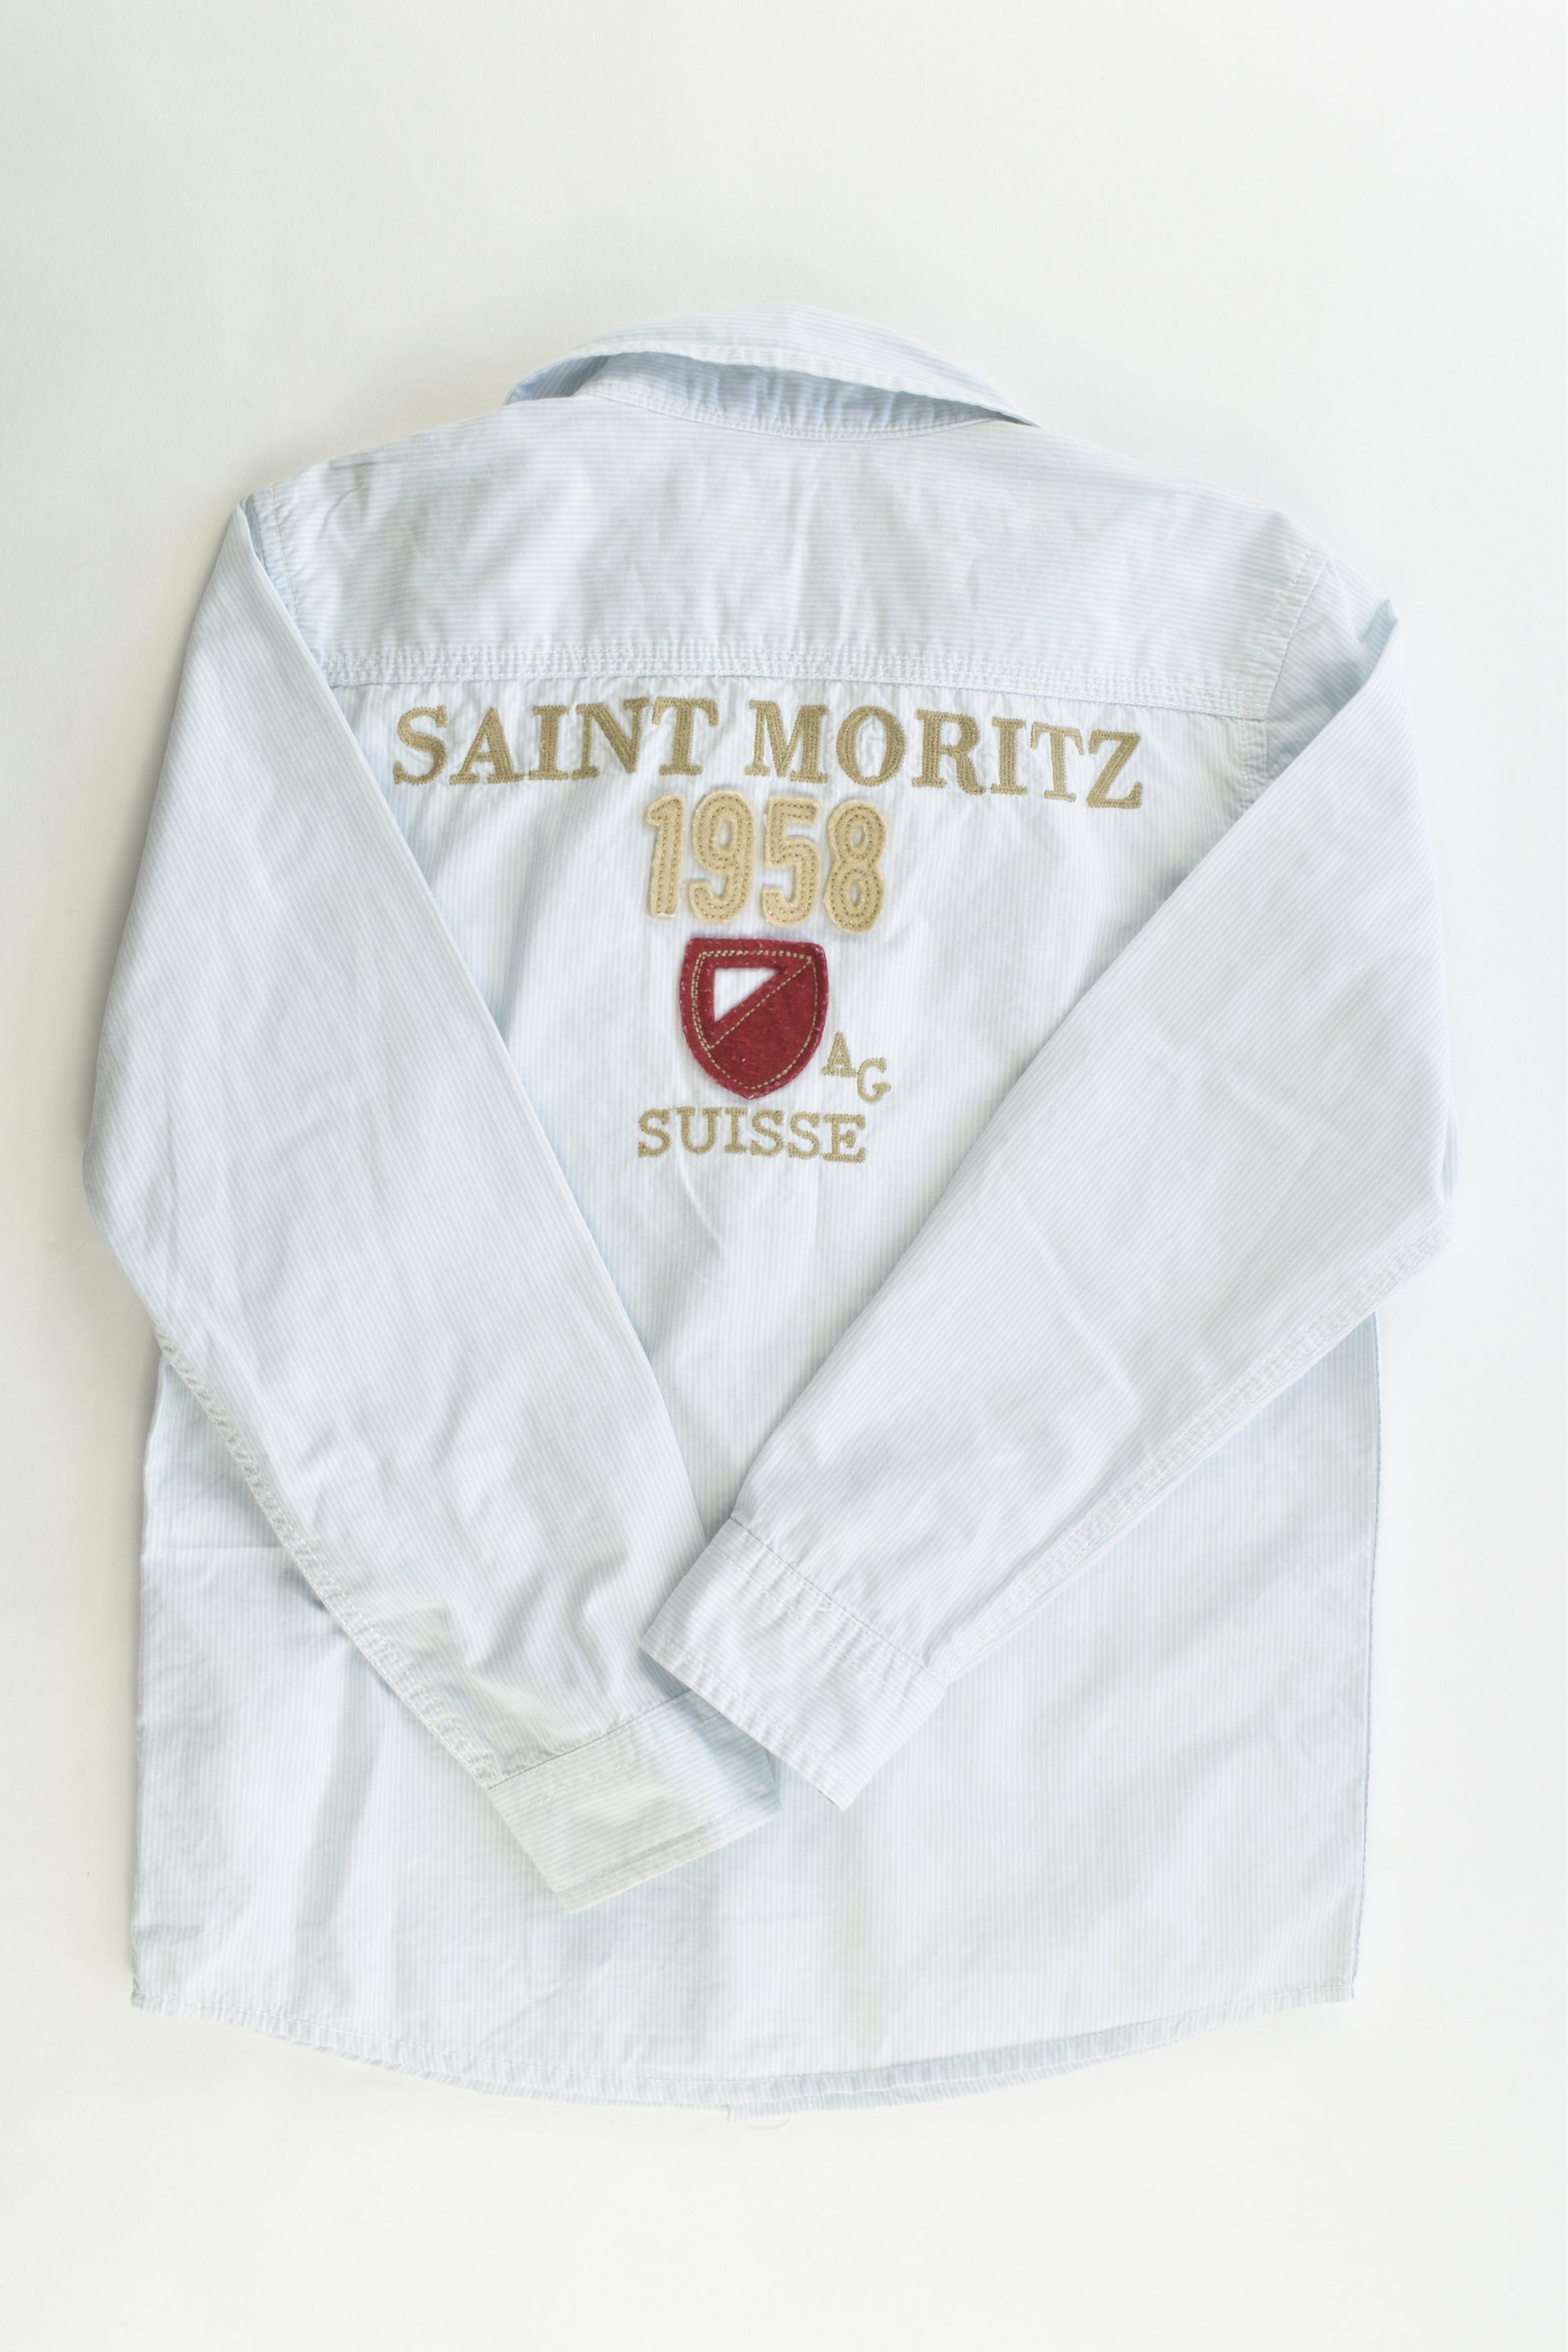 Zara Size 6-7 "Saint Moritz Suisse" Collared Shirt